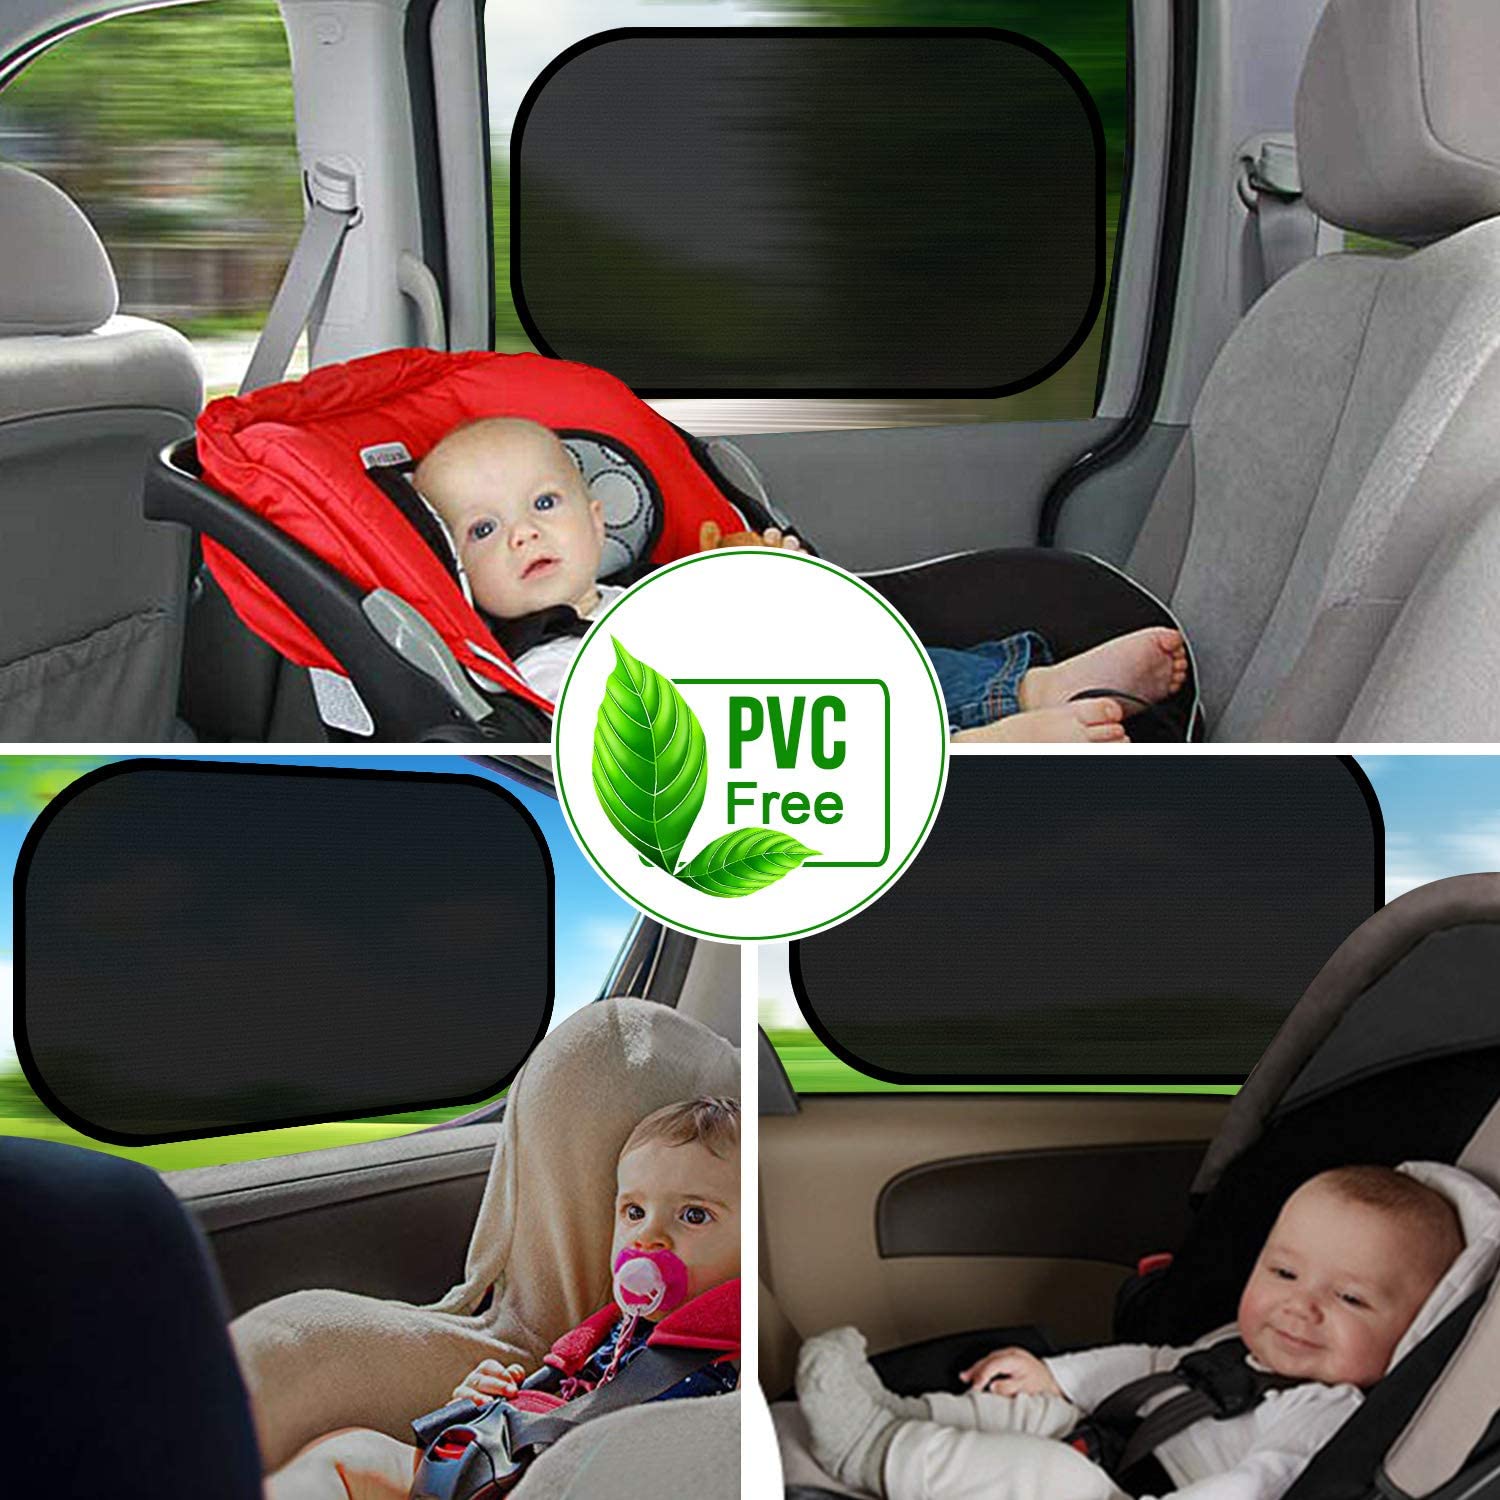 Car Sun Shade 2 Pack,Car Window Shades for Kids Baby Pet UV Rays/Sunlight Protection,Car Side Windscreen Window,Self-Adhesive Car Sun Shades,Baby Window Shade,Rear Side Window Universal Fit - FoxMart™️ - WIN.MAX